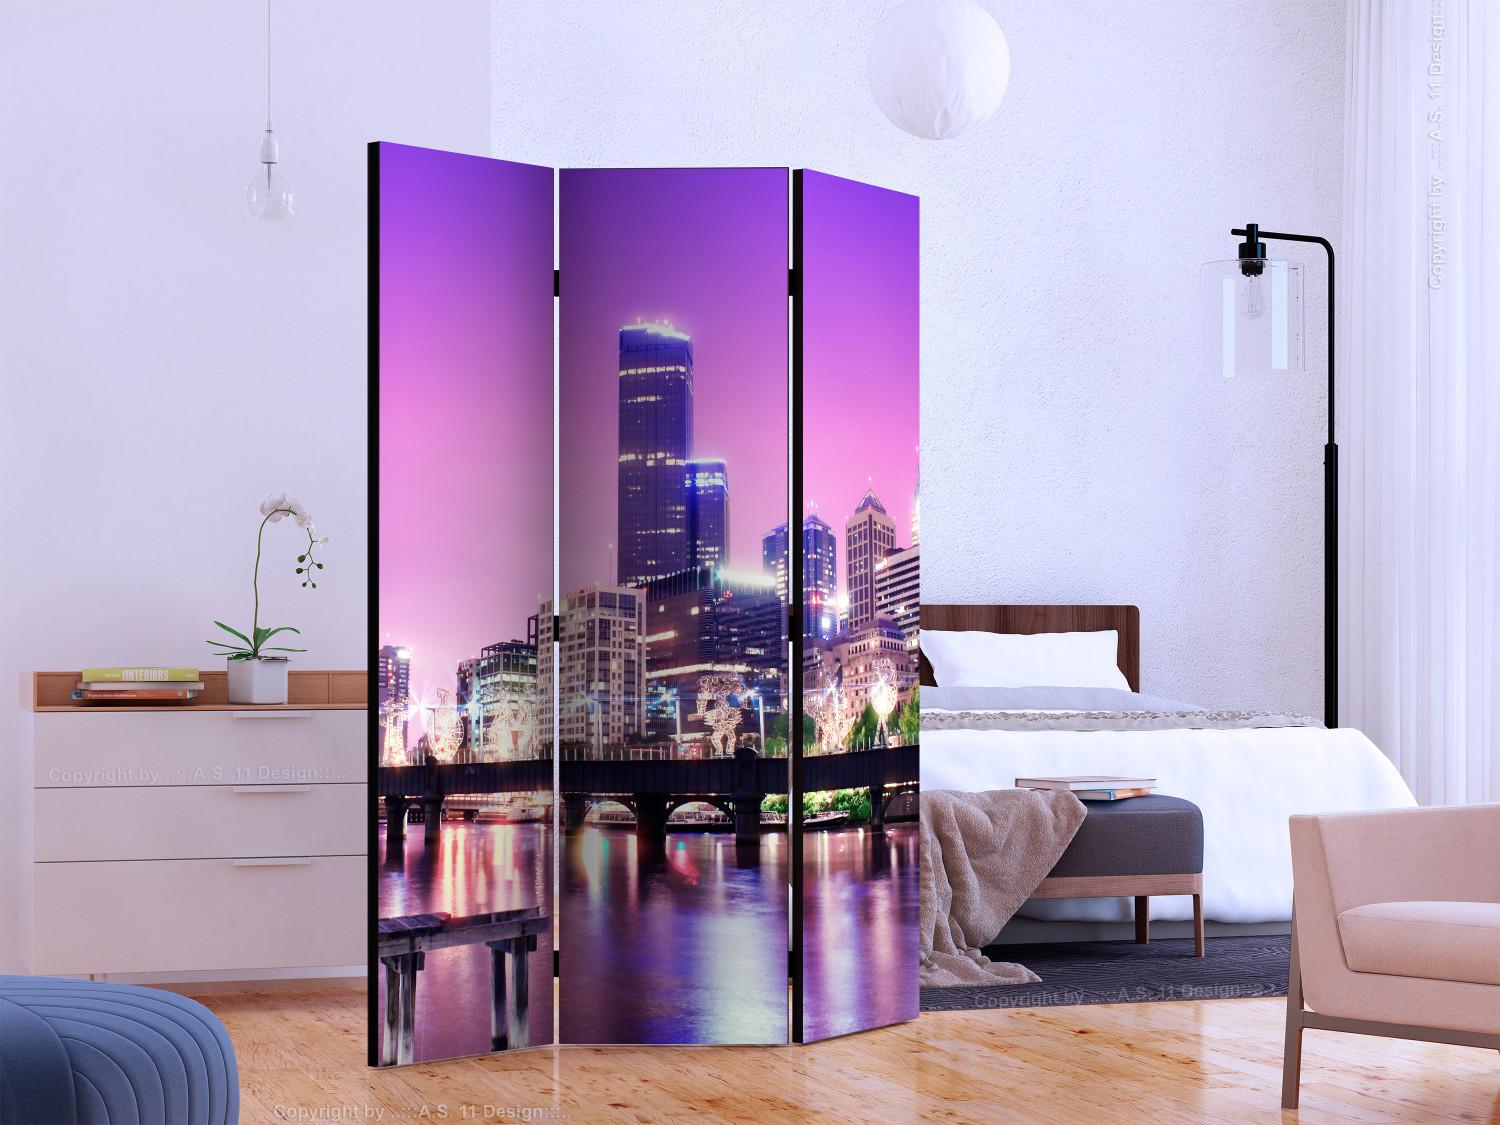 Room Divider Purple Melbourne (3-piece) - skyscrapers against a purple sky